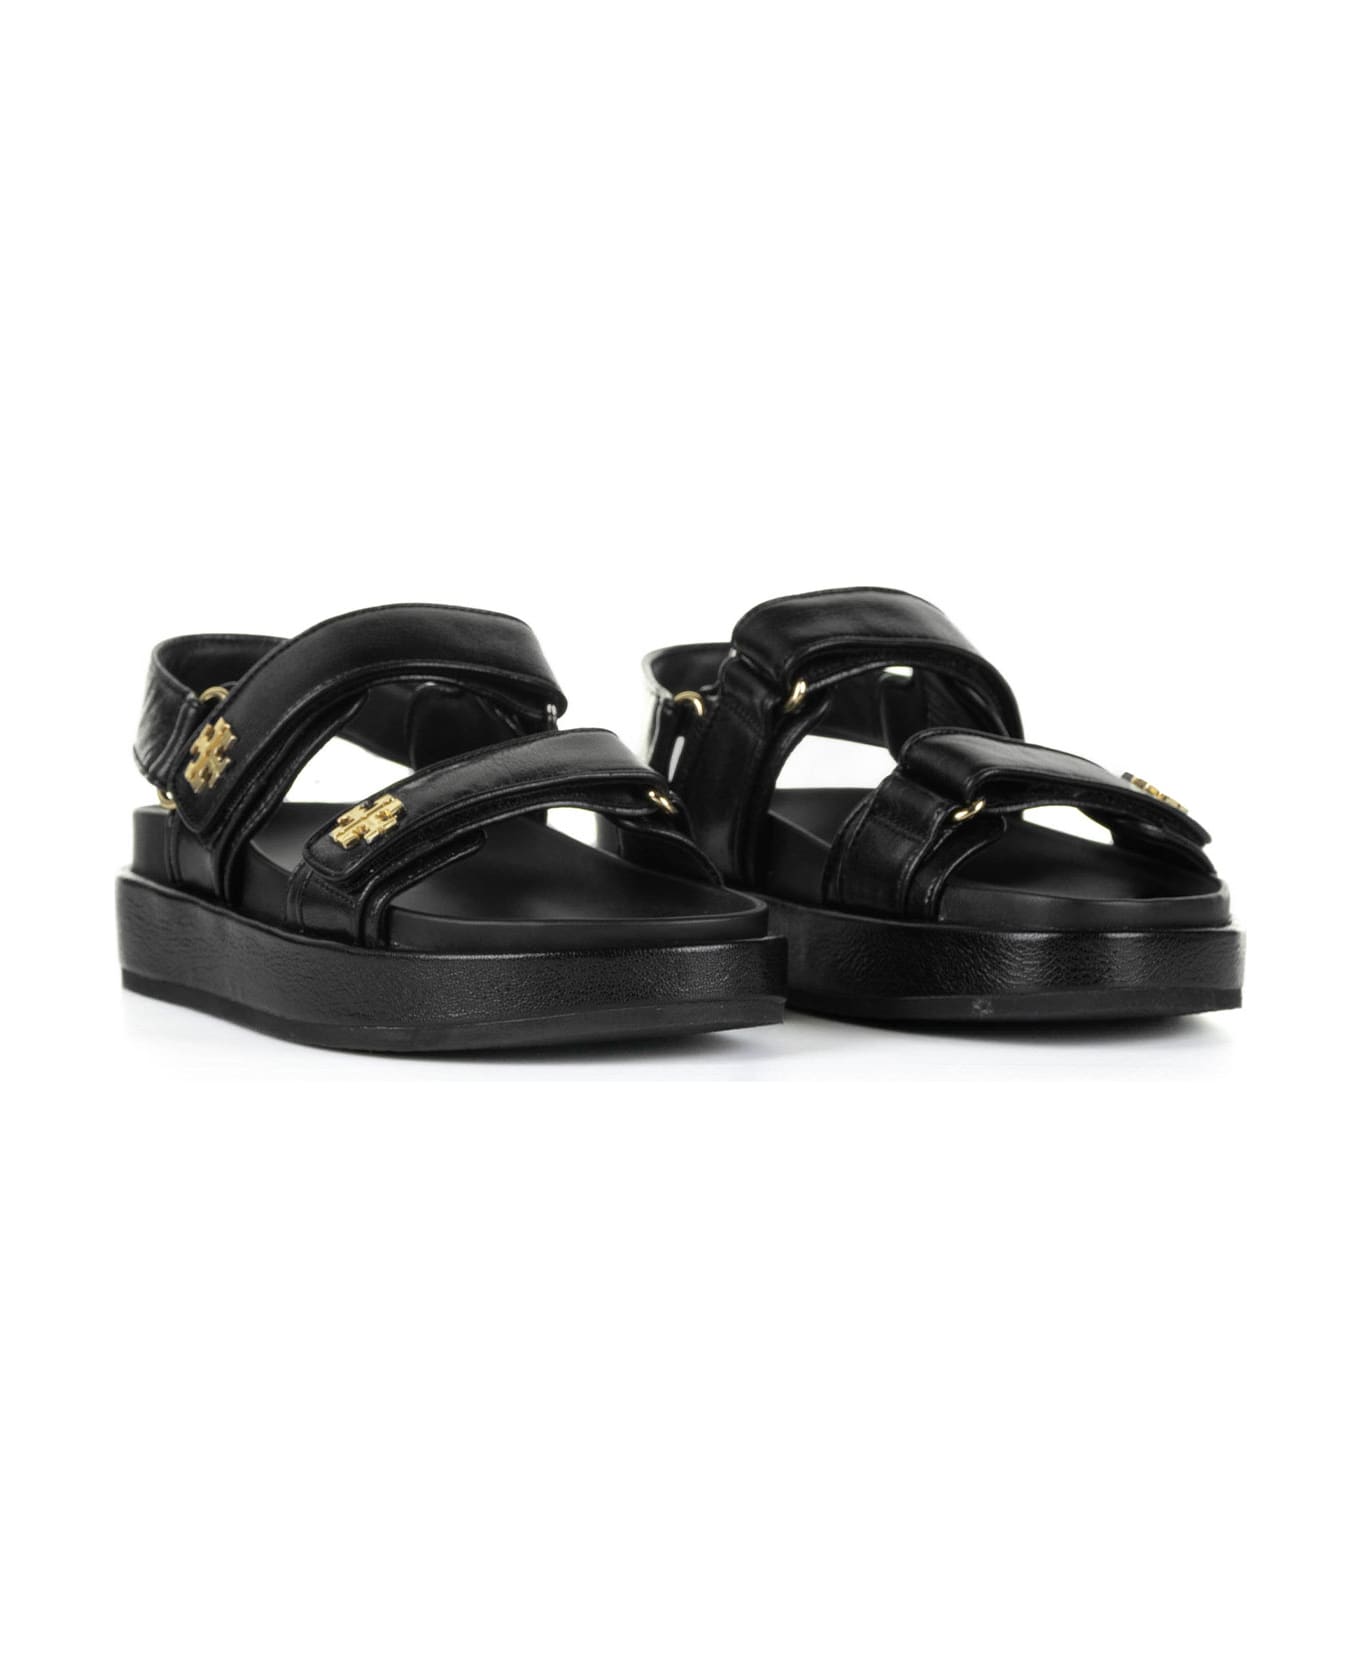 Tory Burch Sandals - PERFECT BLACK